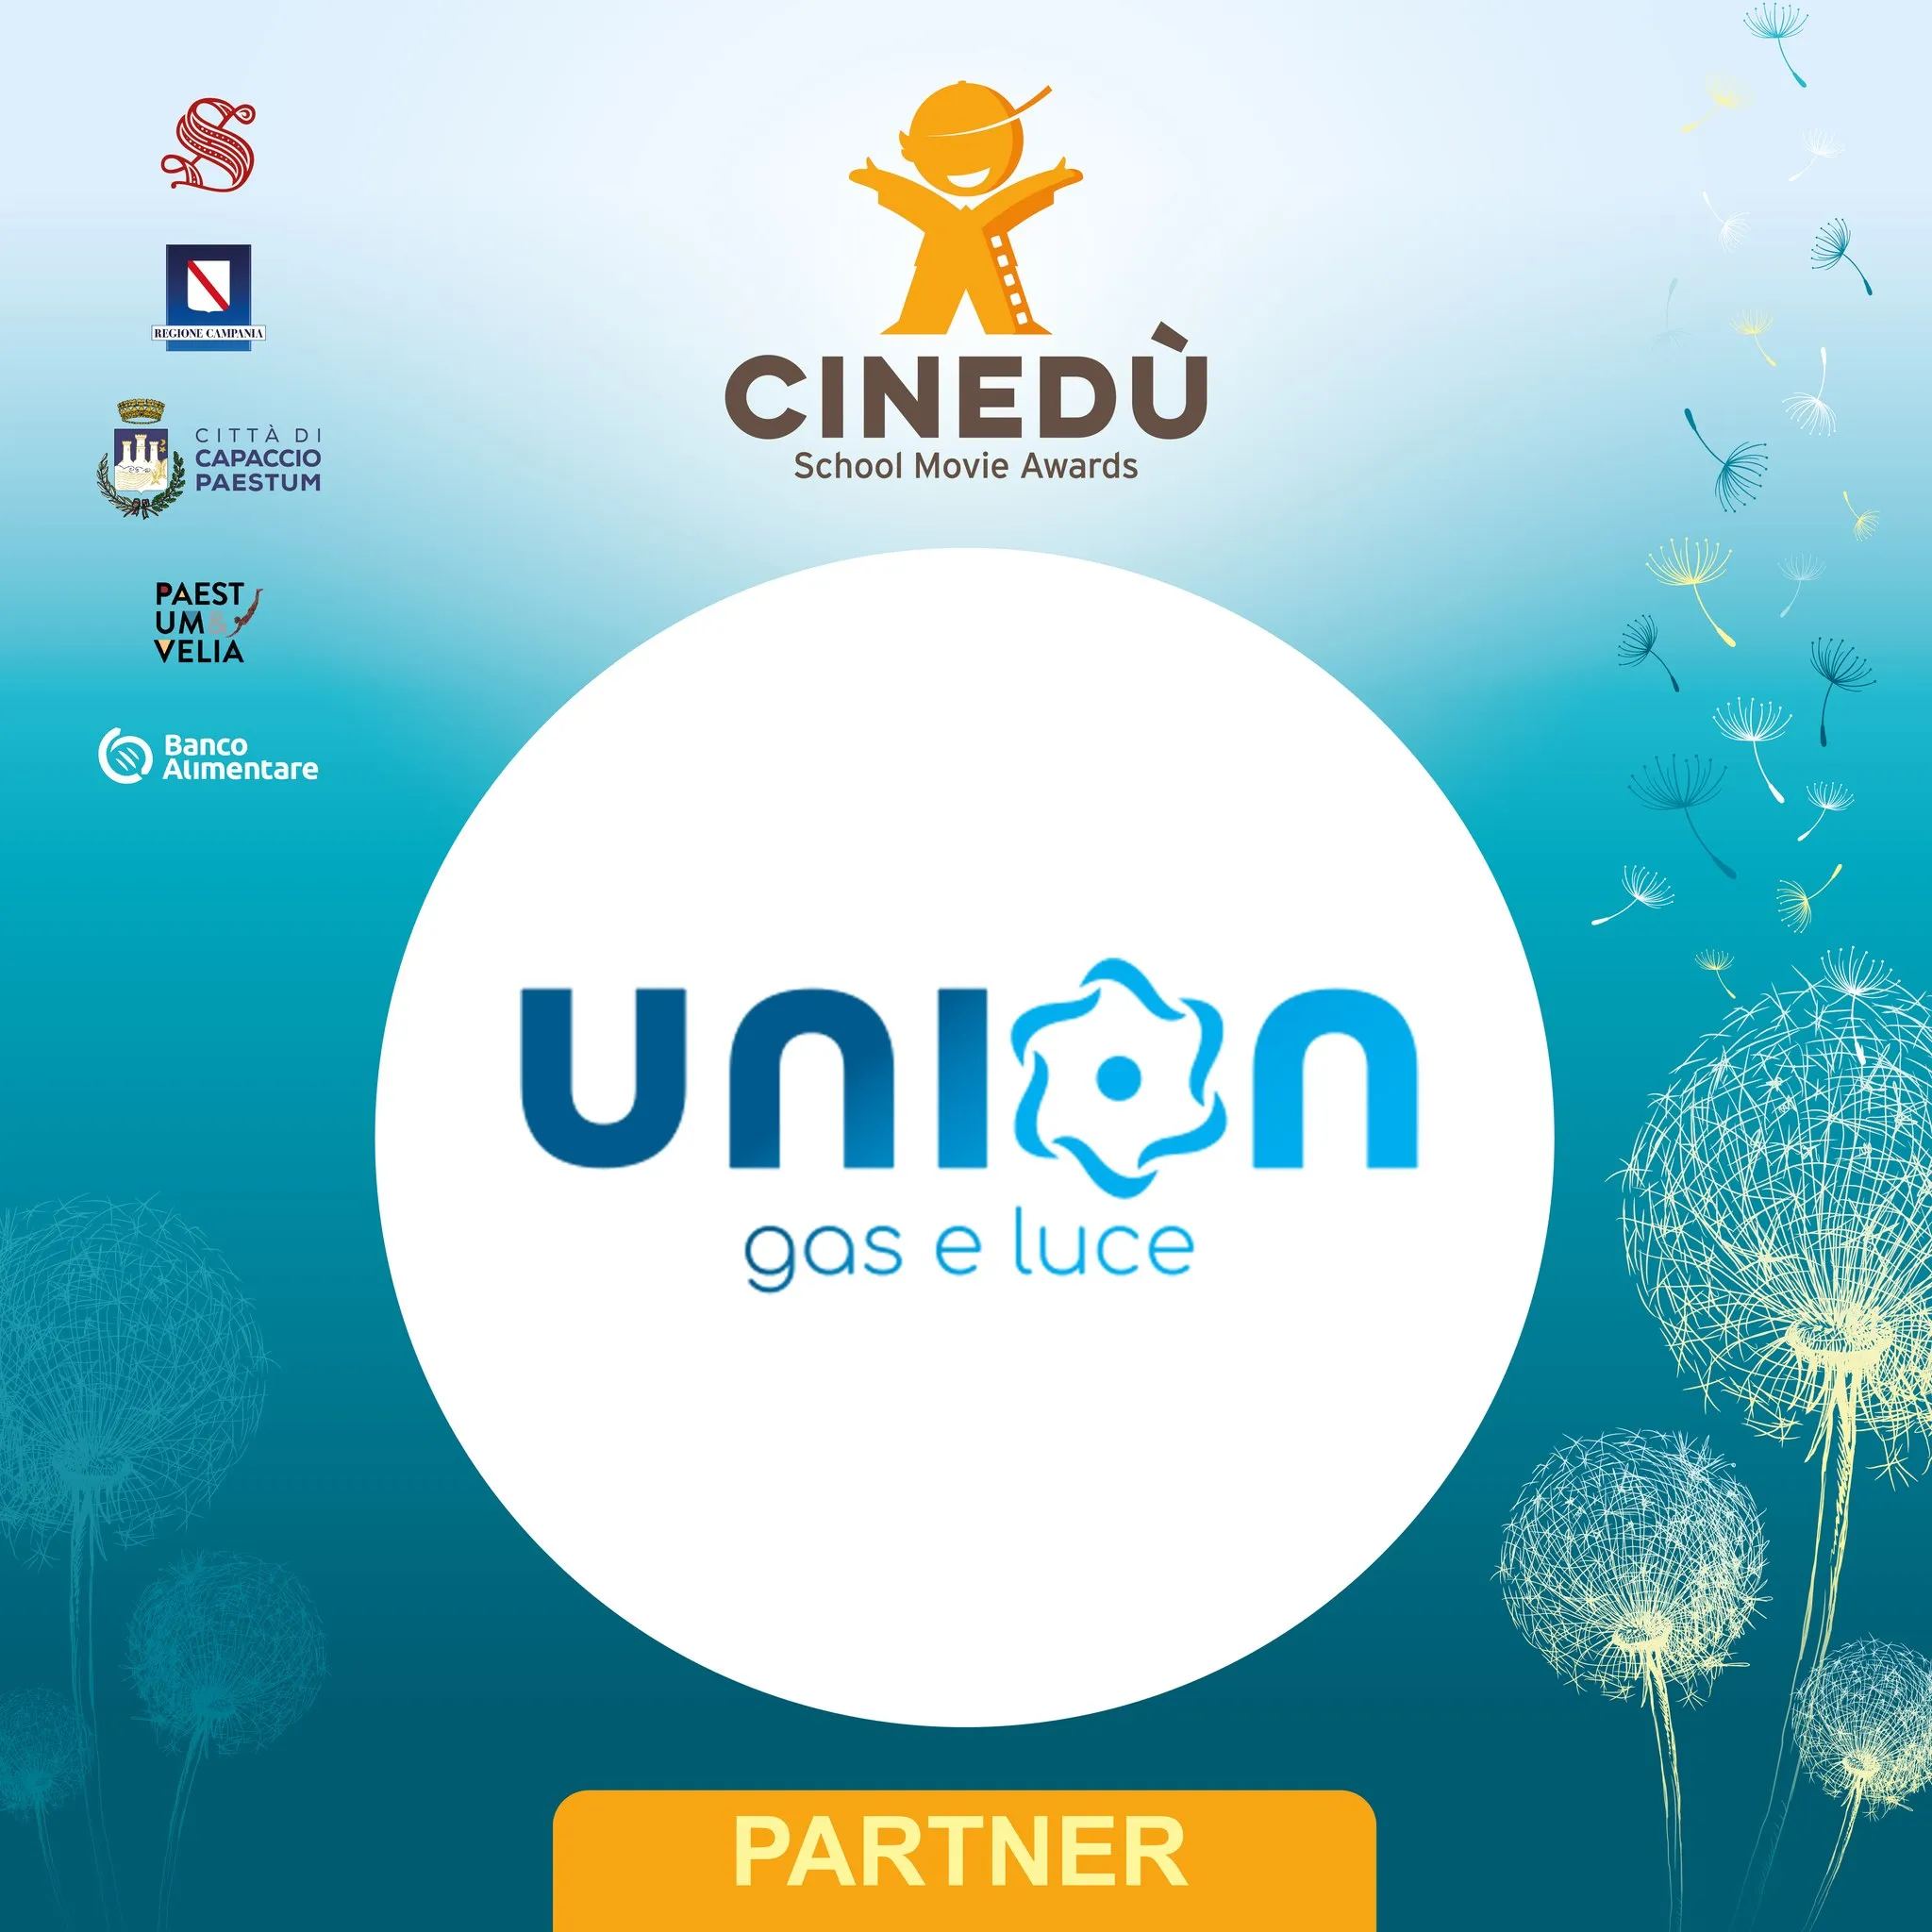 Union Gas e Luce sponsor di “Cinedù - School Movie Awards”